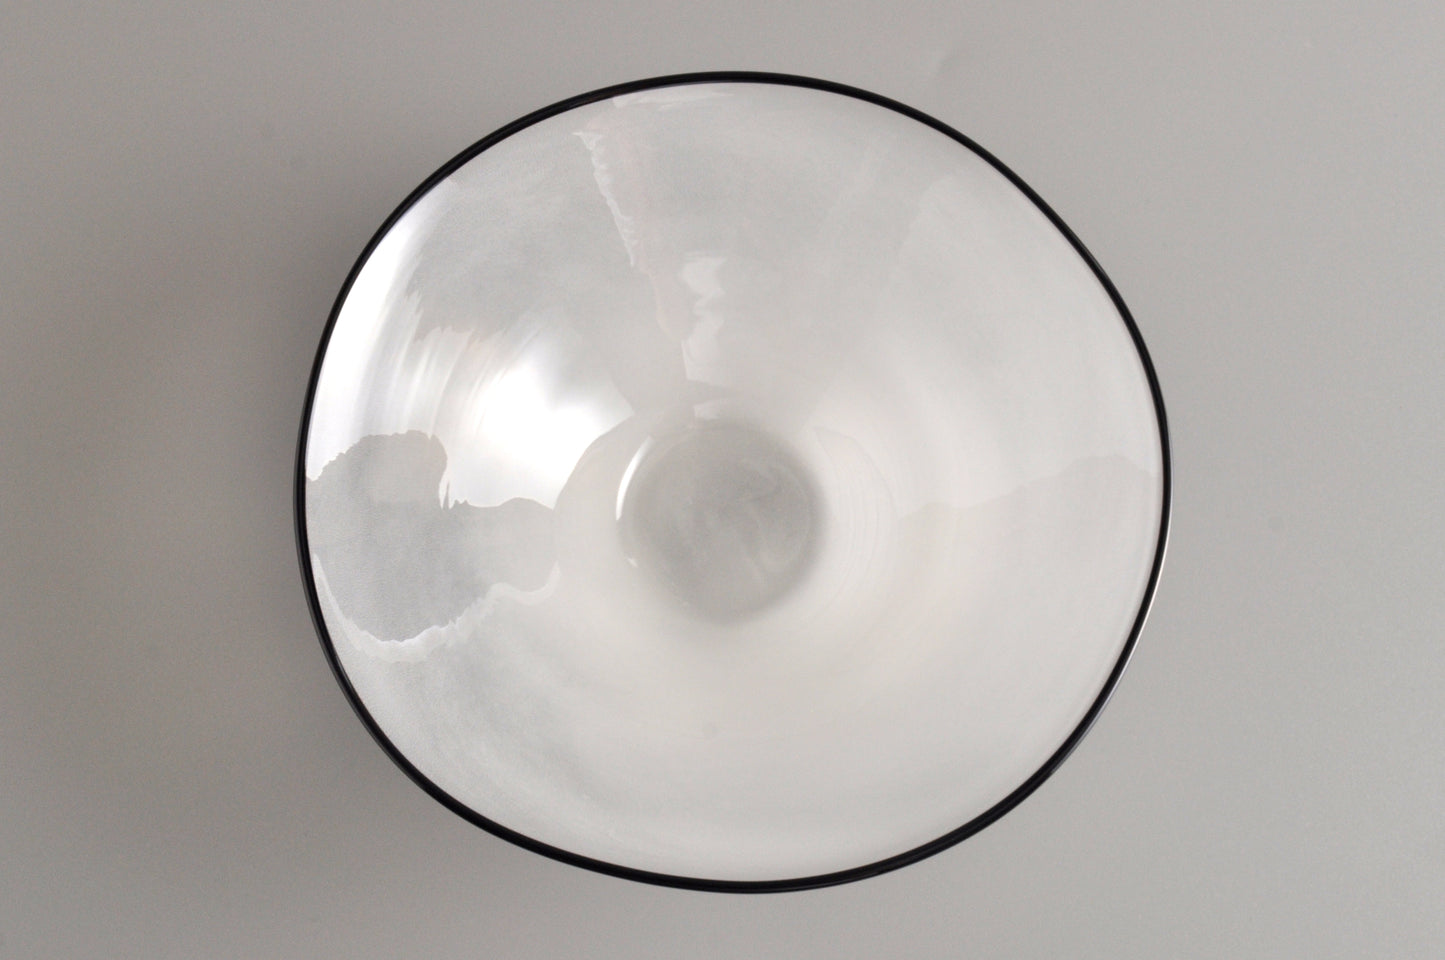 kasumi bowl S ivory 3645